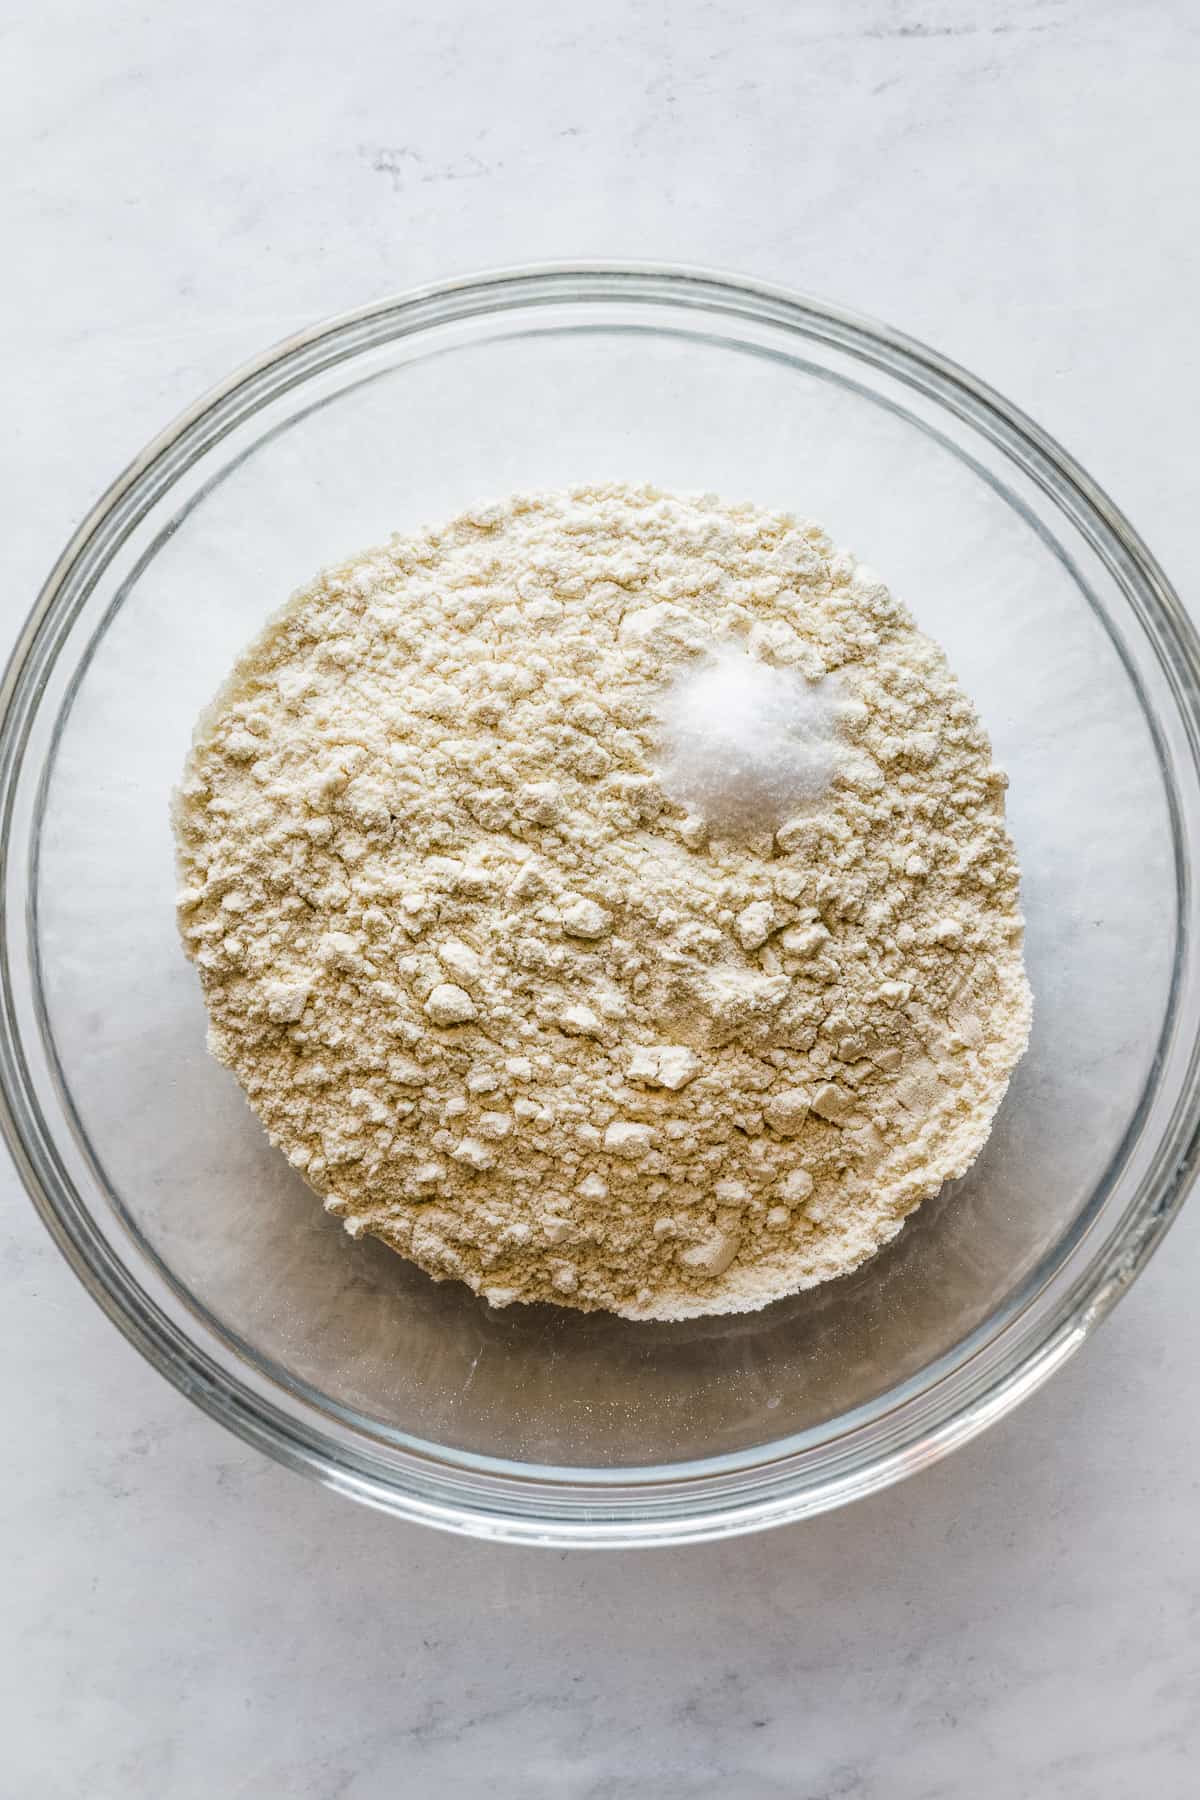 Masa harina and salt in a bowl.